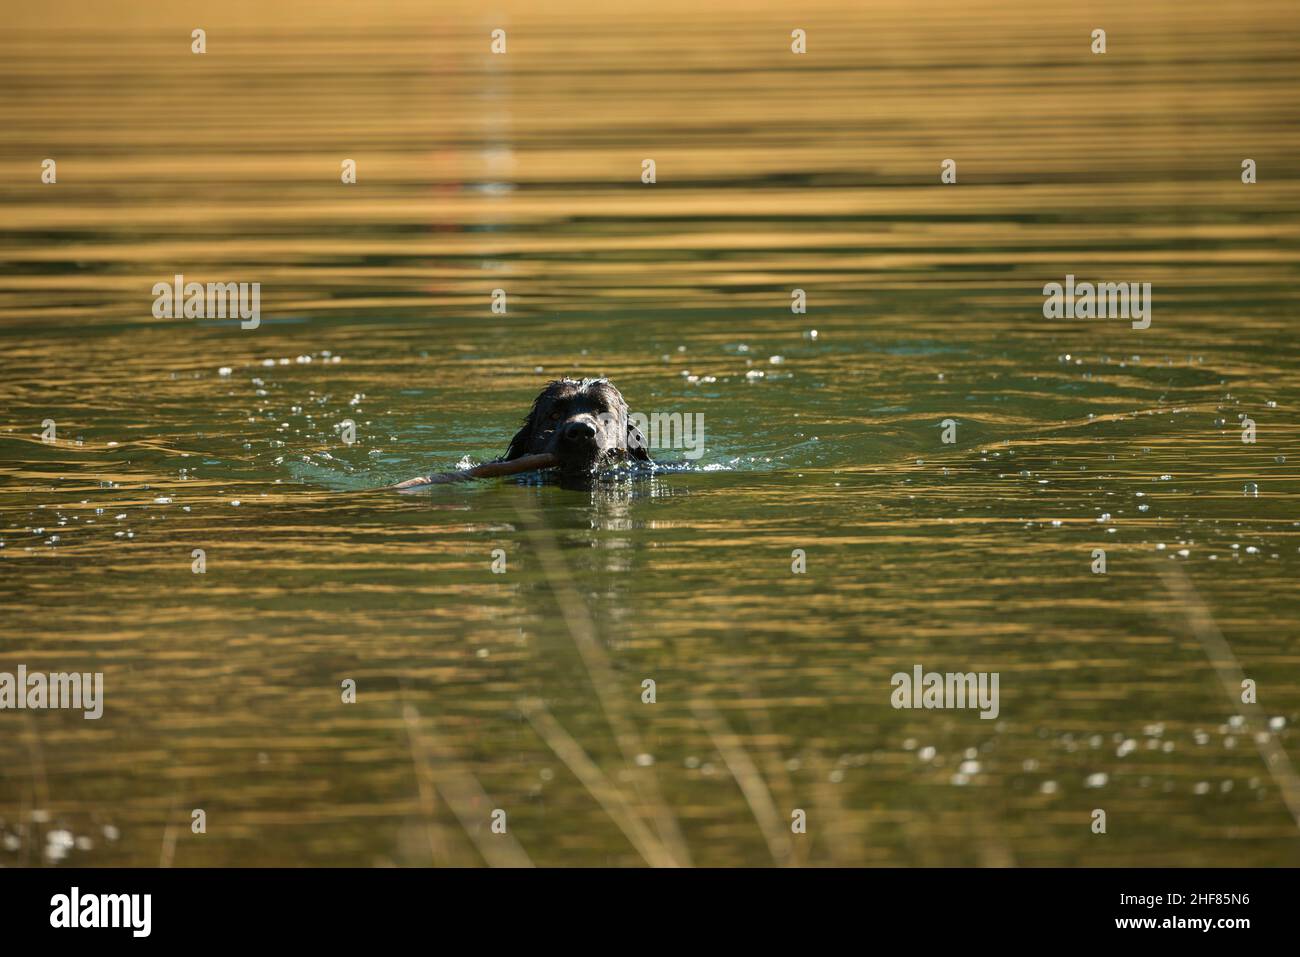 wet black dog in lago, nuoto, recupero, setter ibrido Foto Stock